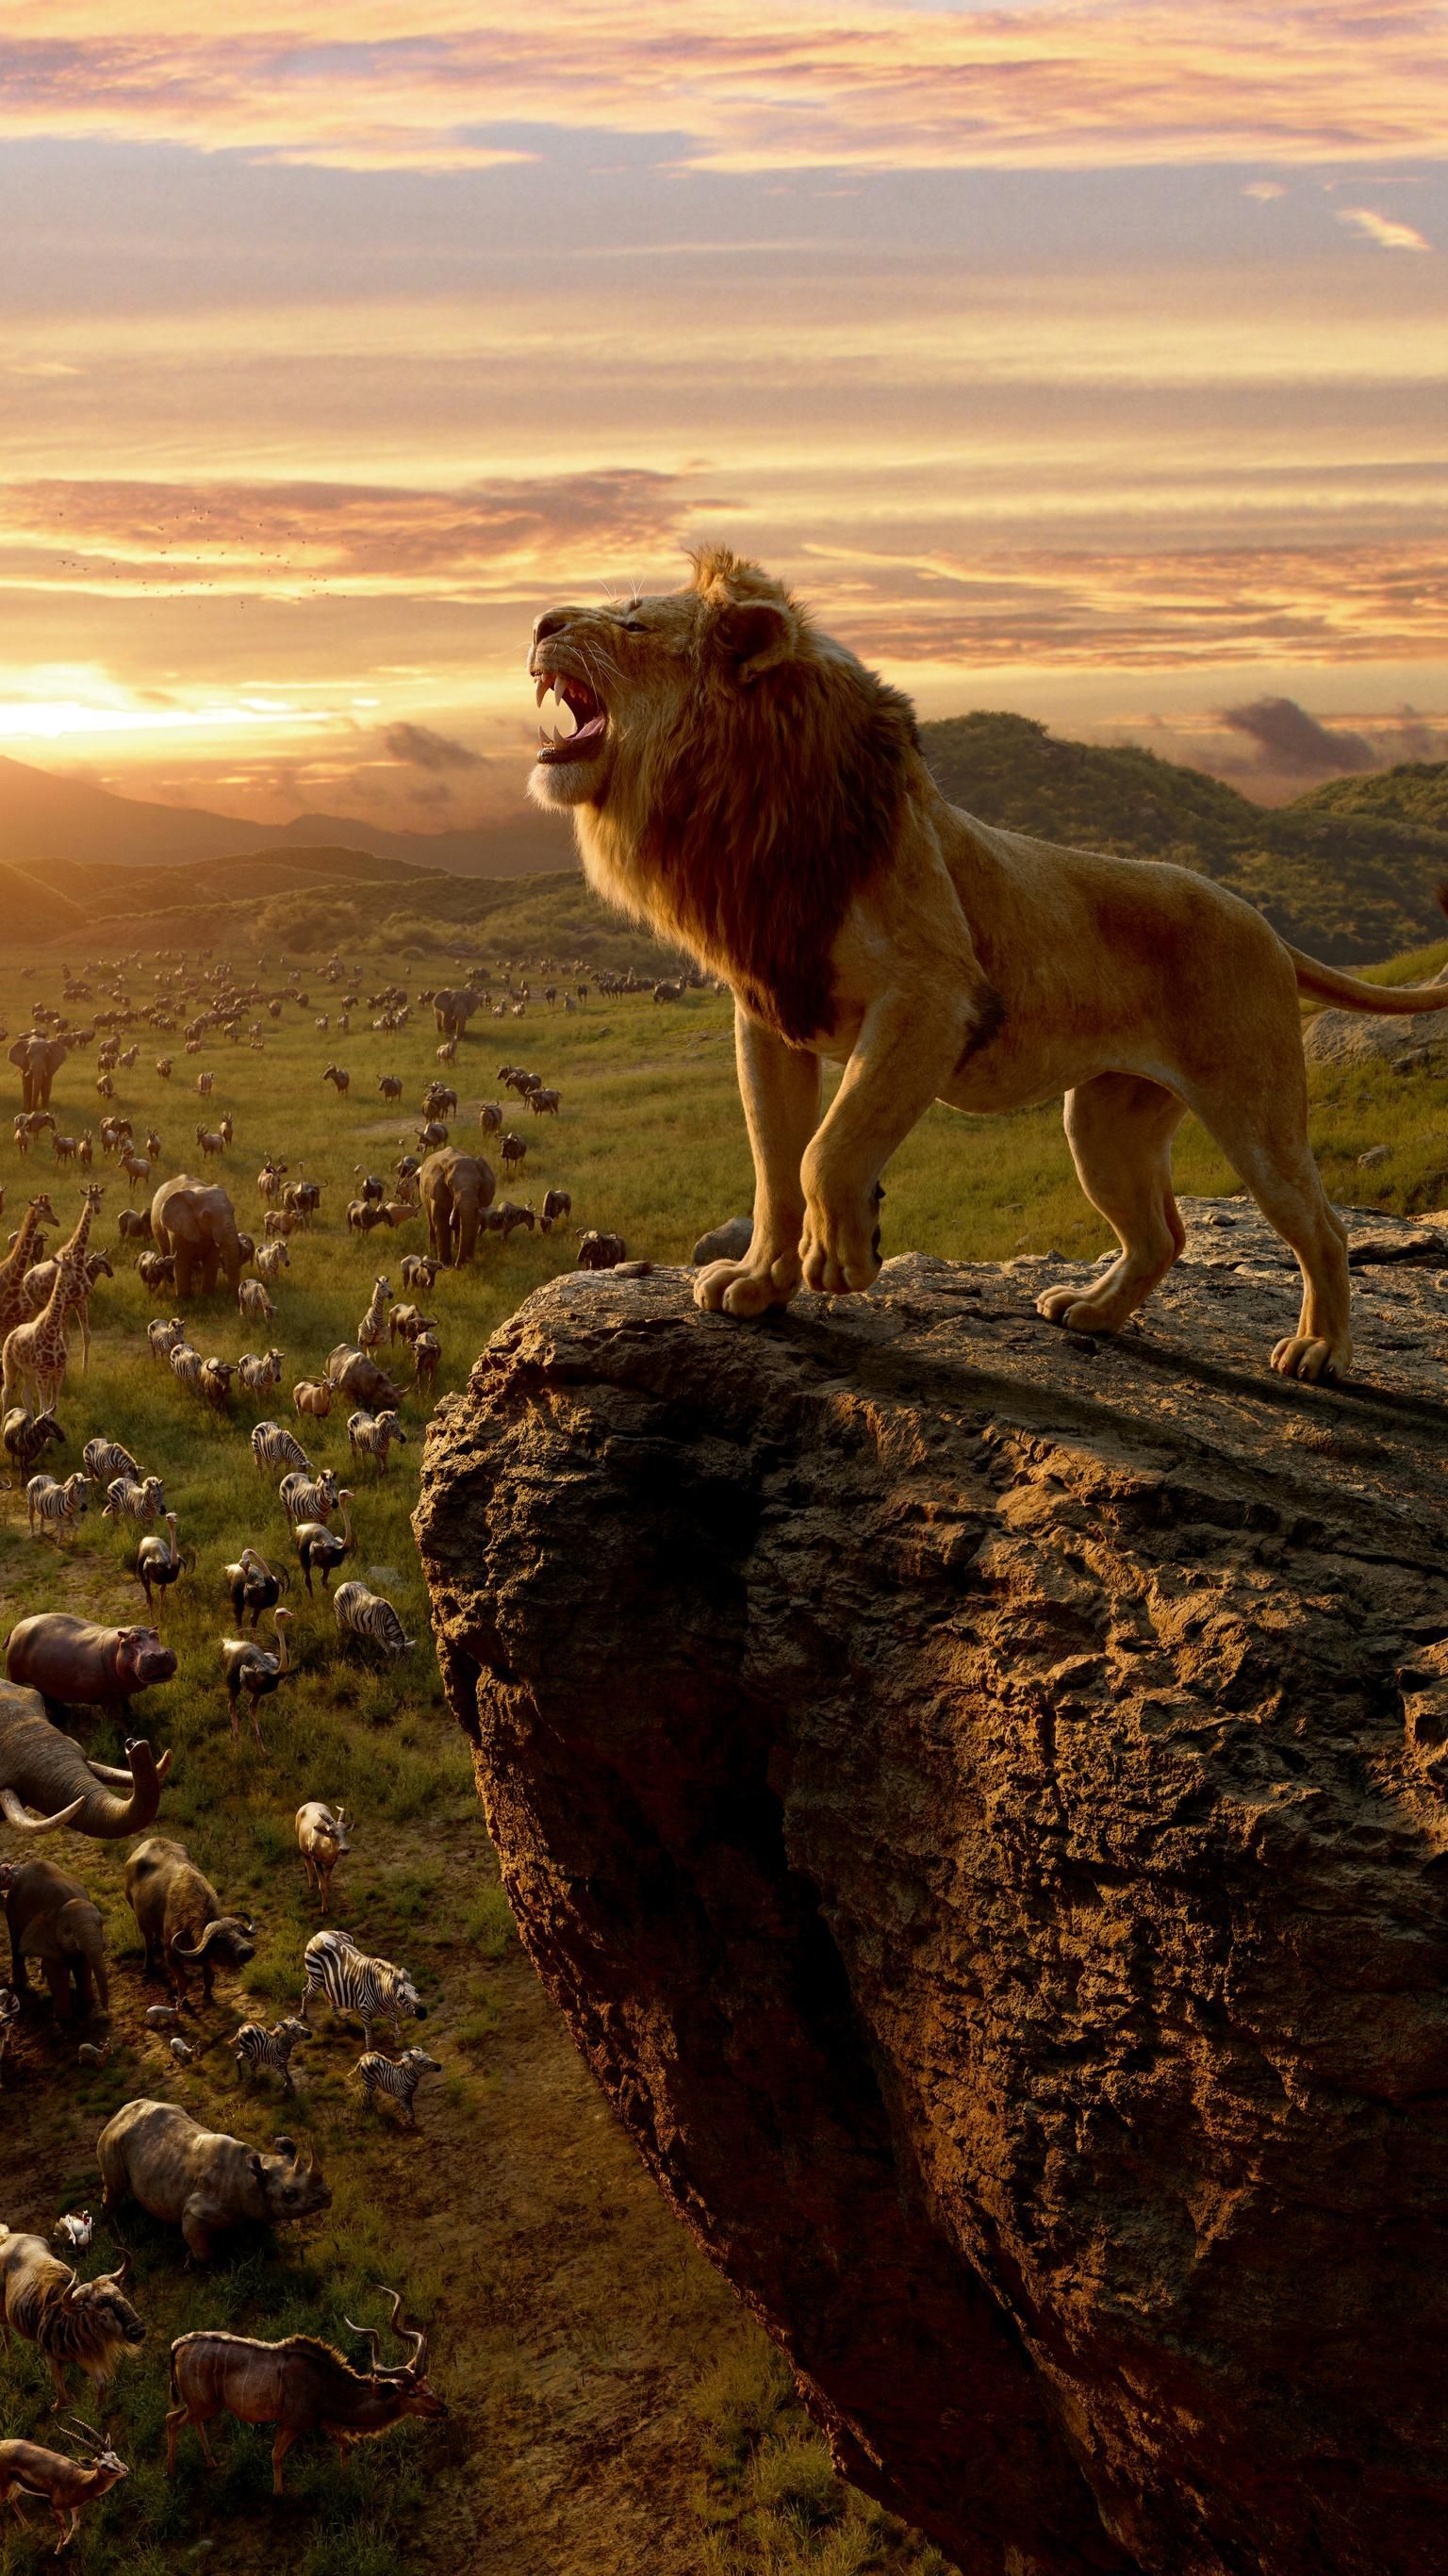 The Lion King (2019) Phone Wallpaper. Lion king movie, Lion king